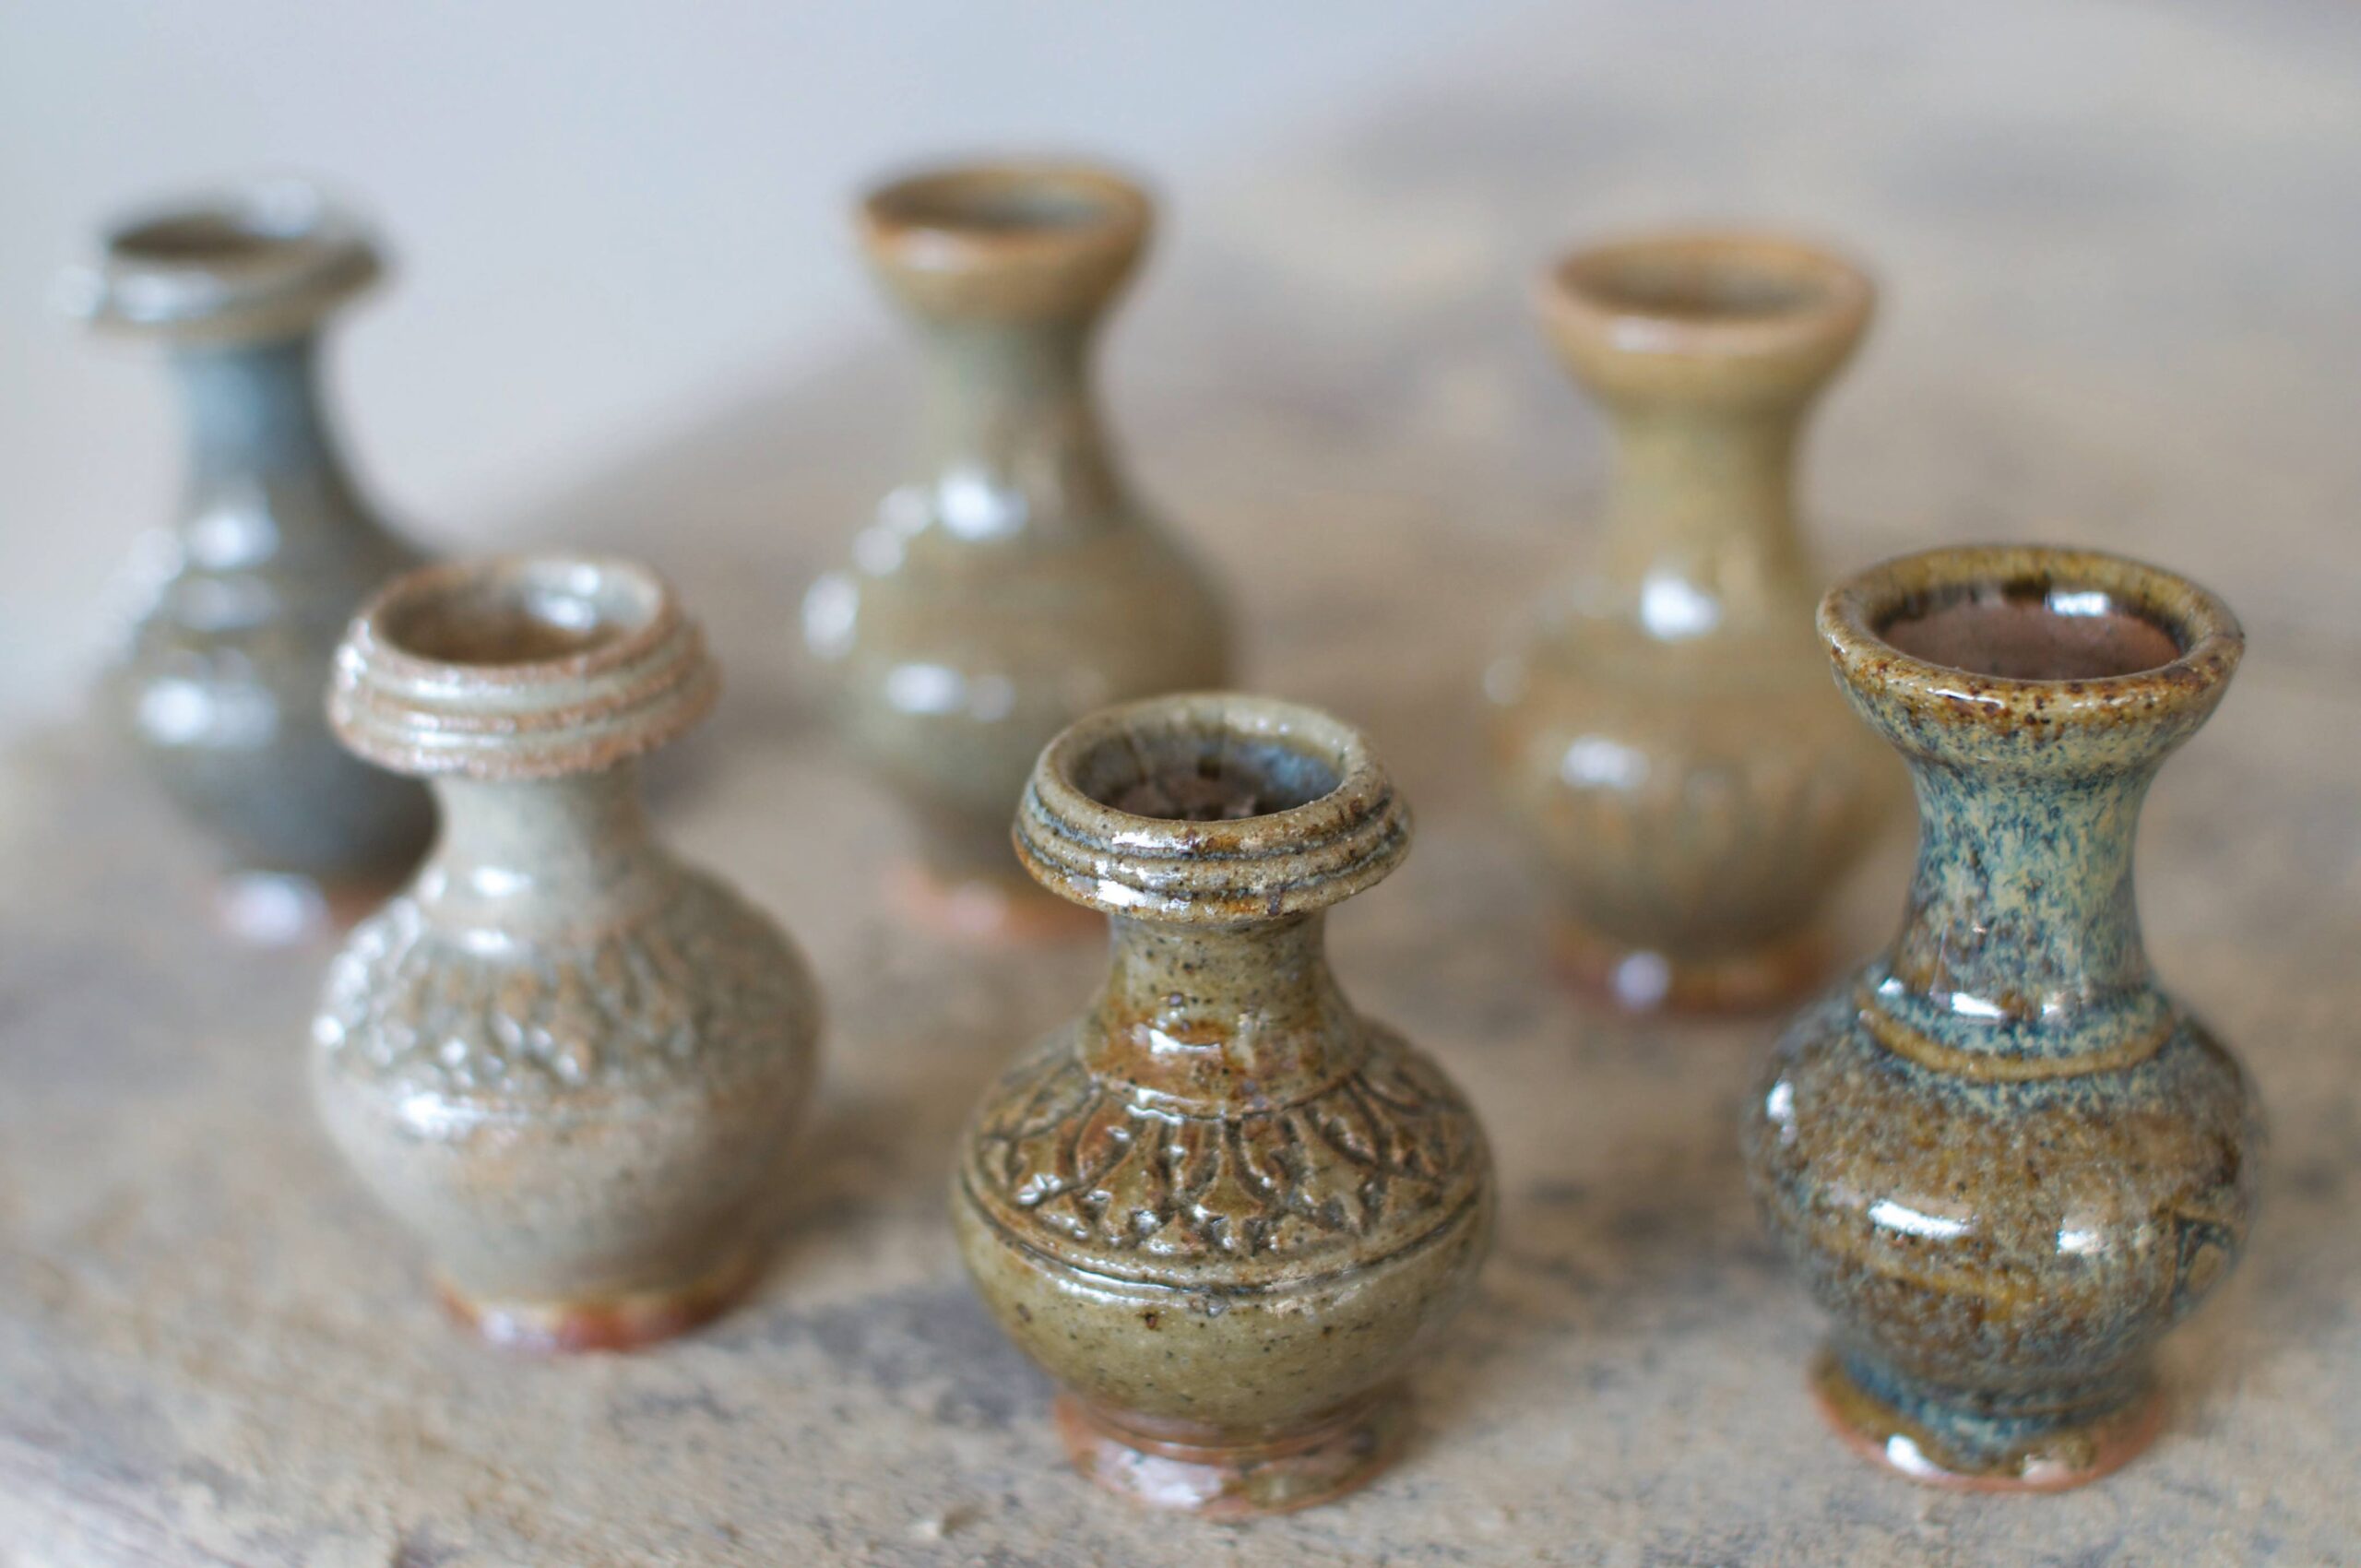 Representative work: “The pride of Khmer” A ceramic brand from a pottery region